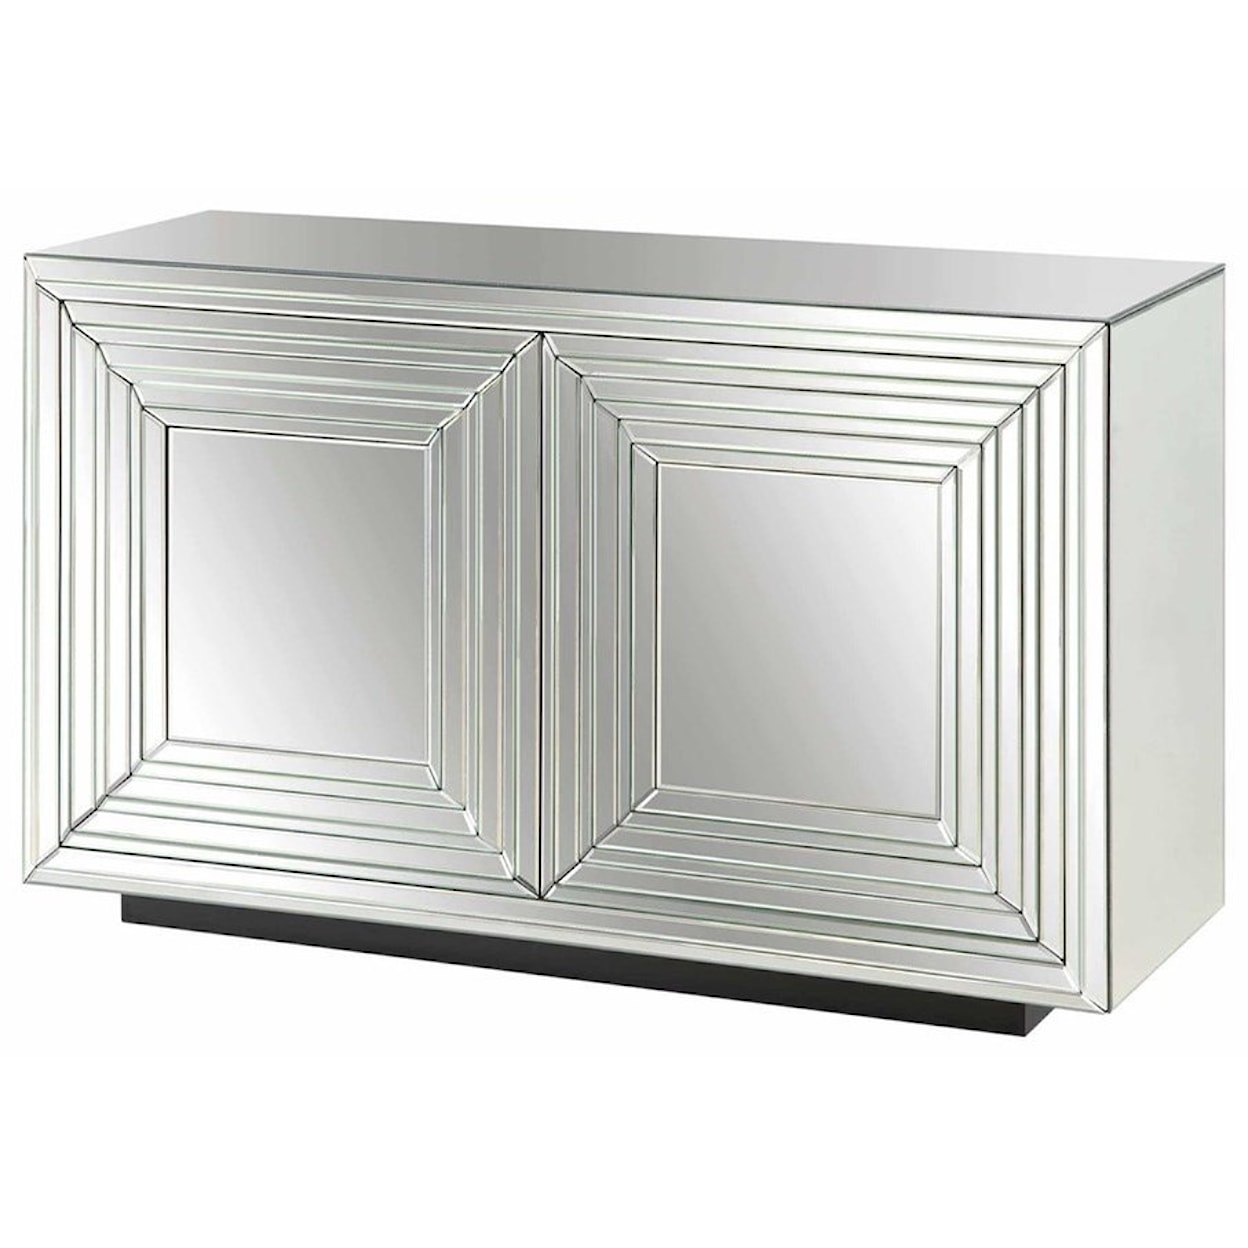 Crestview Collection Accent Furniture Millenium 2 Door Mirrored Cabinet